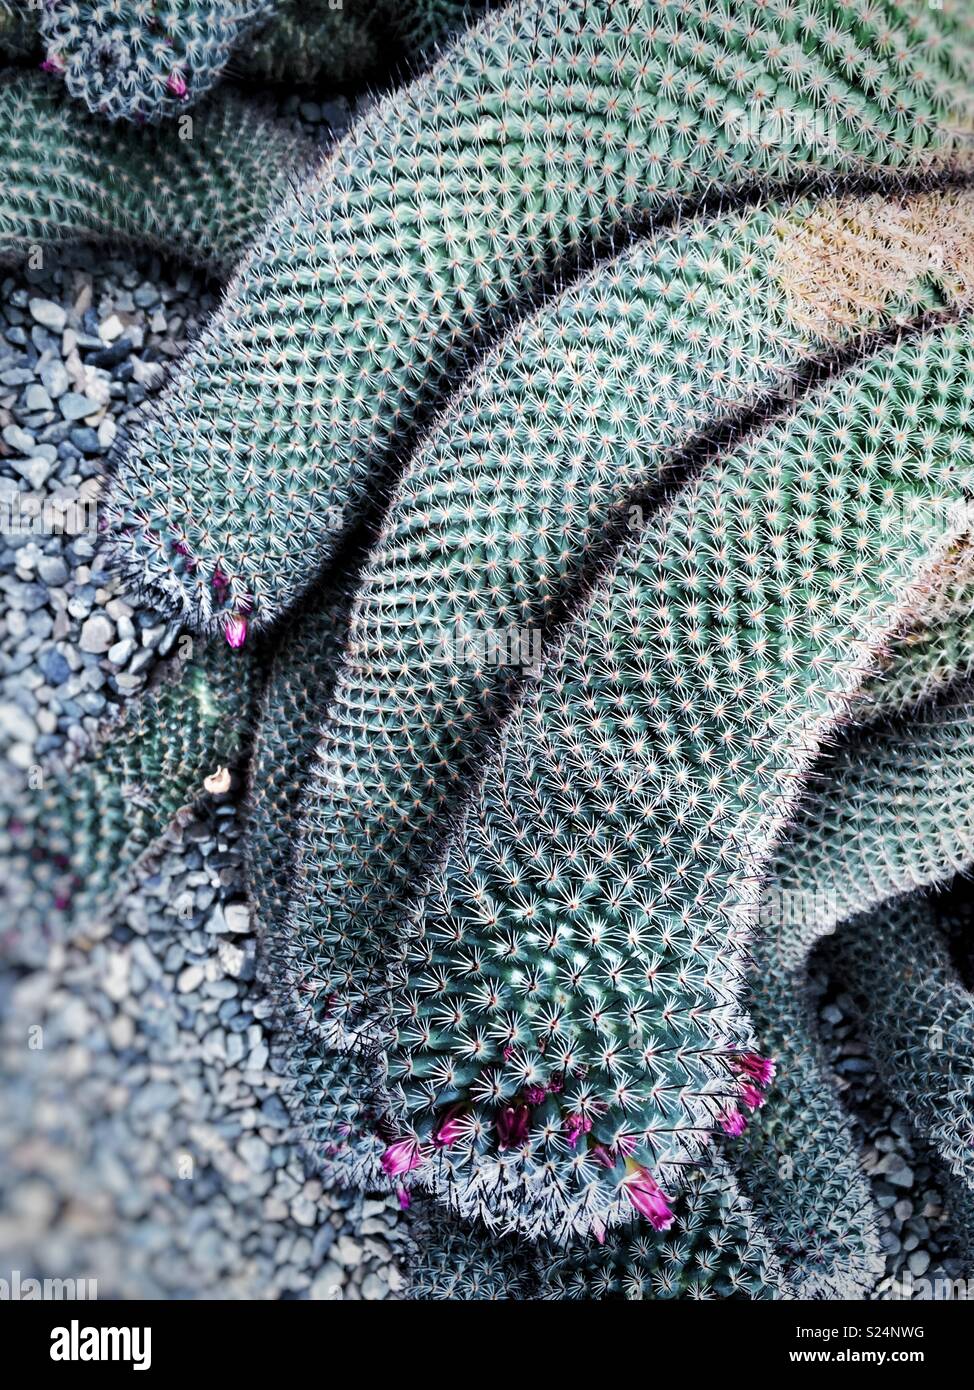 Giant cacti succulents Stock Photo